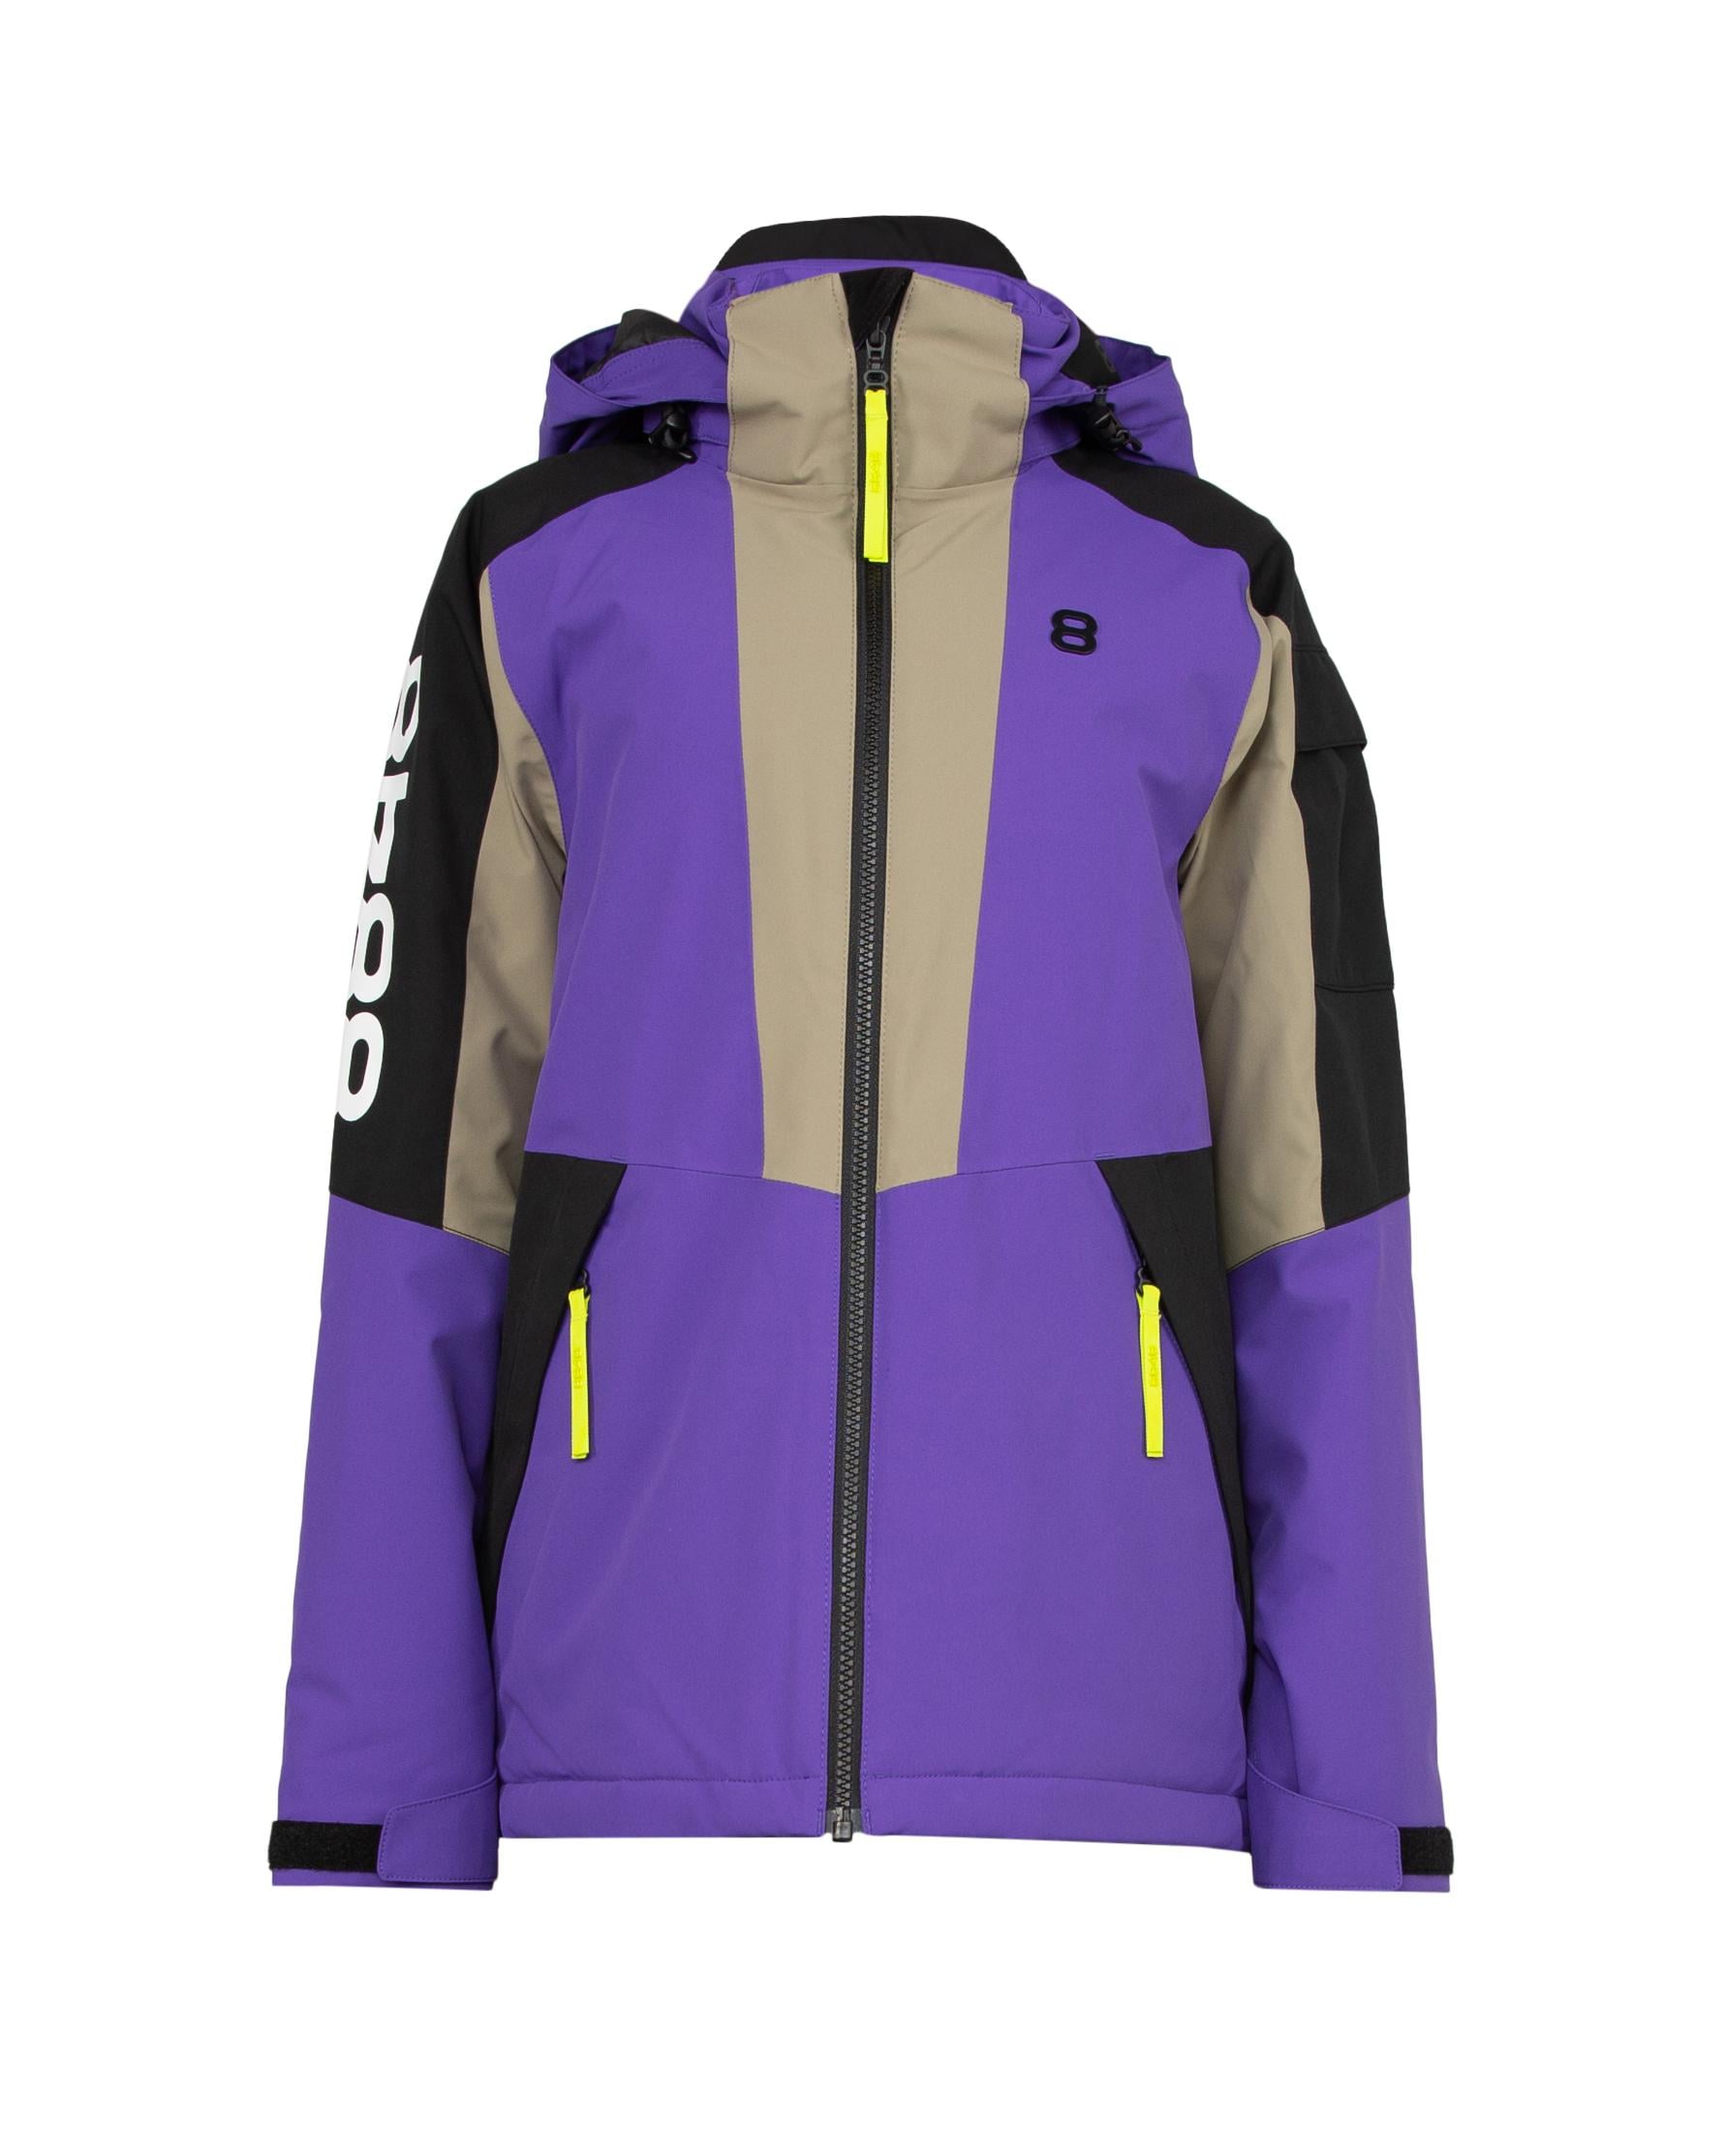 Miksu JR Jacket Purple - Violette Ski Jacke Kinder